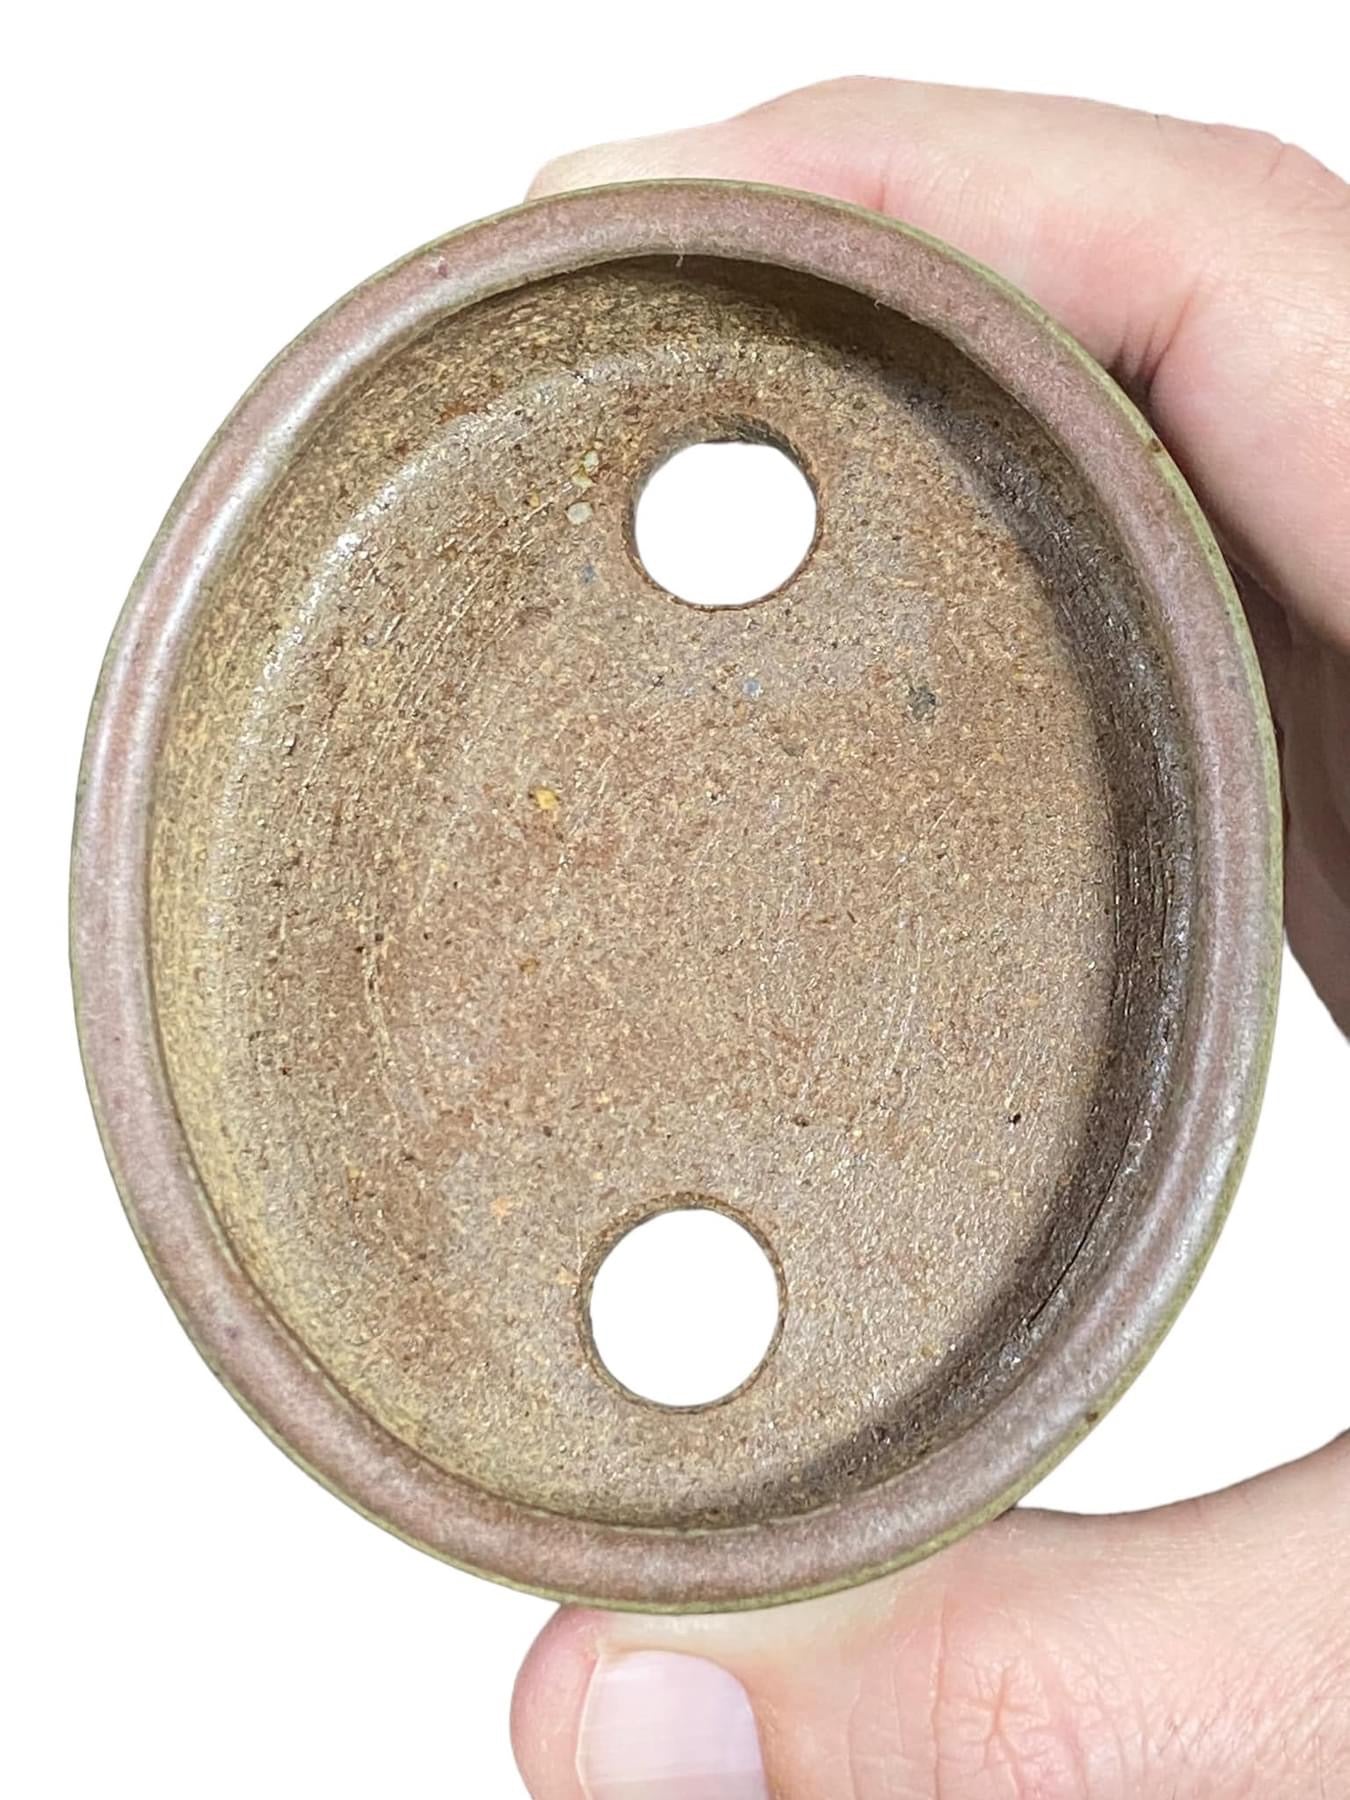 Heian Kosen - Rare and Old Oval Bonsai Pot